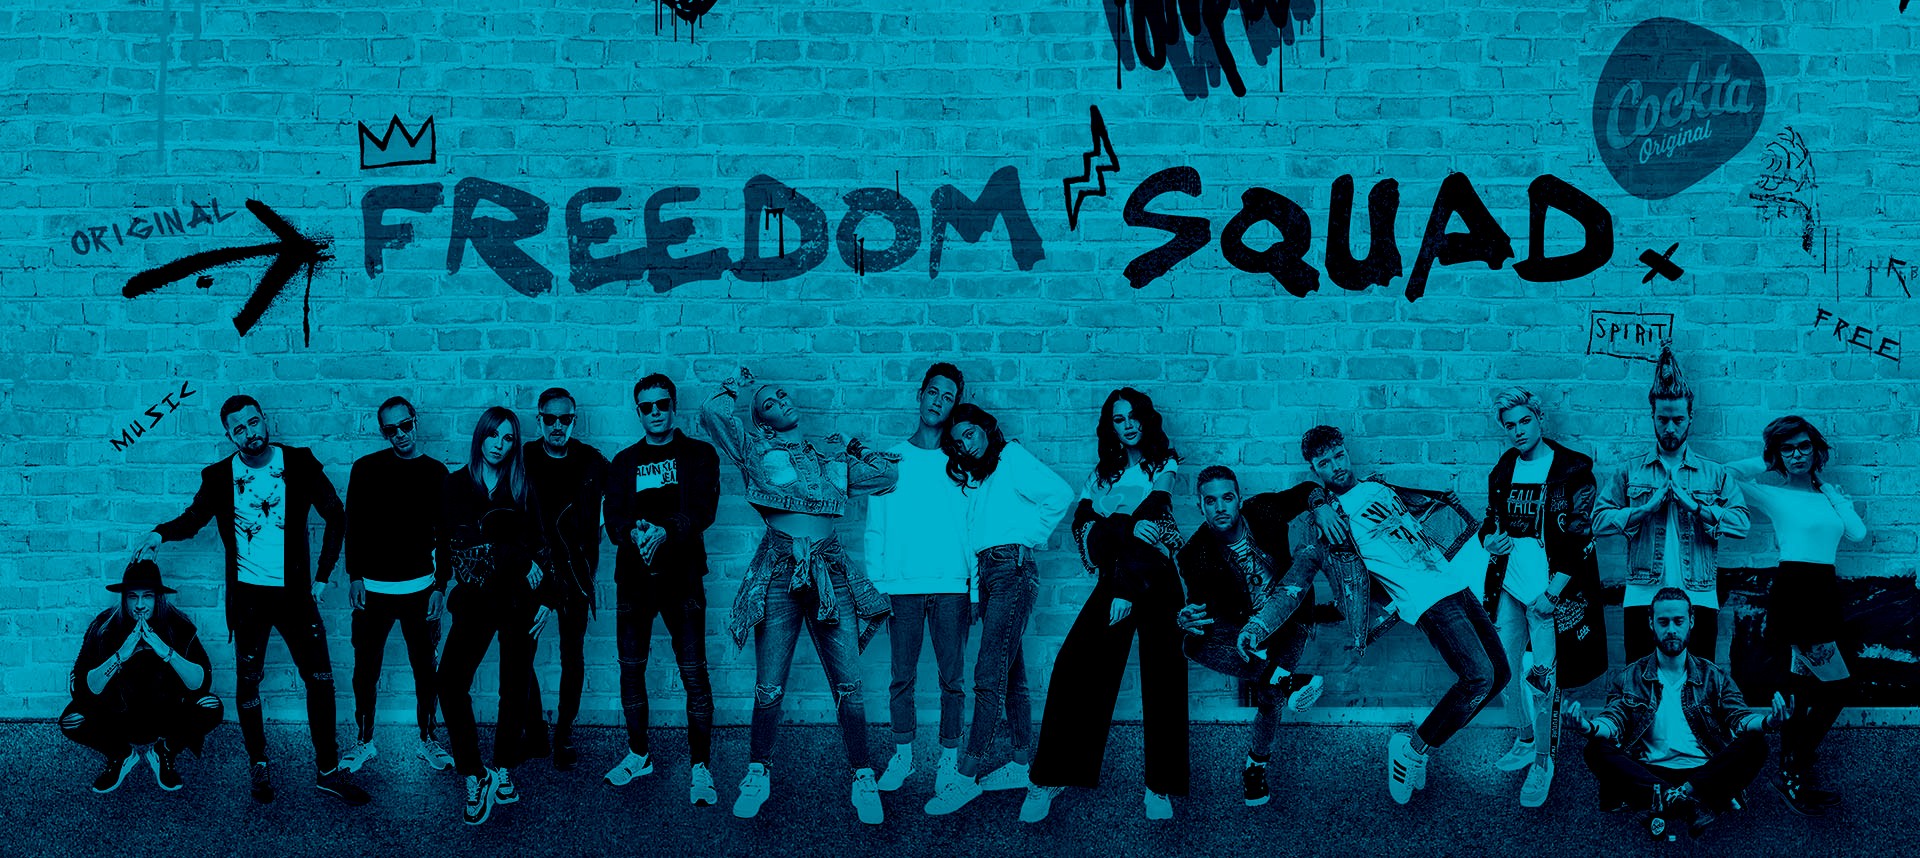 Freedom squad banner image sl